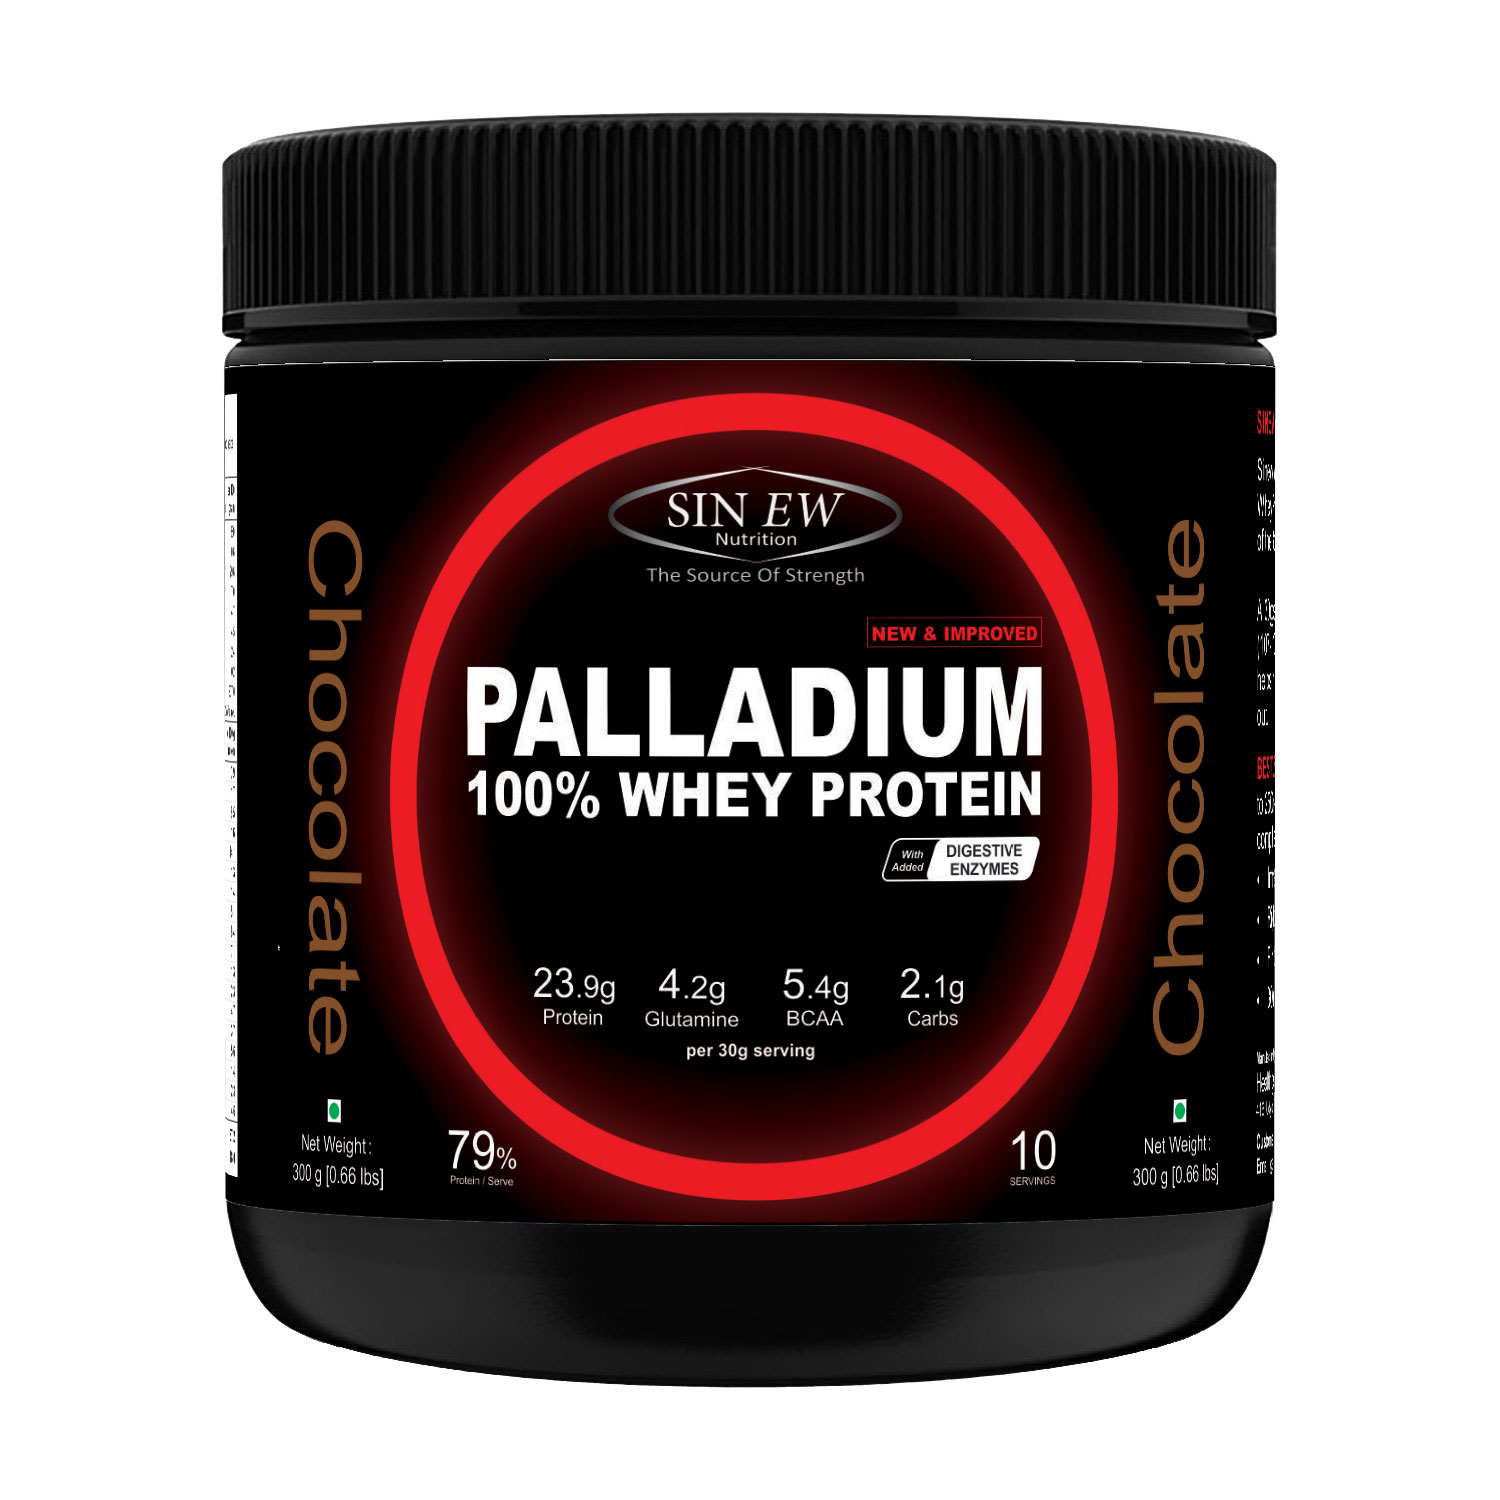 Palladium Chocolate 300g F